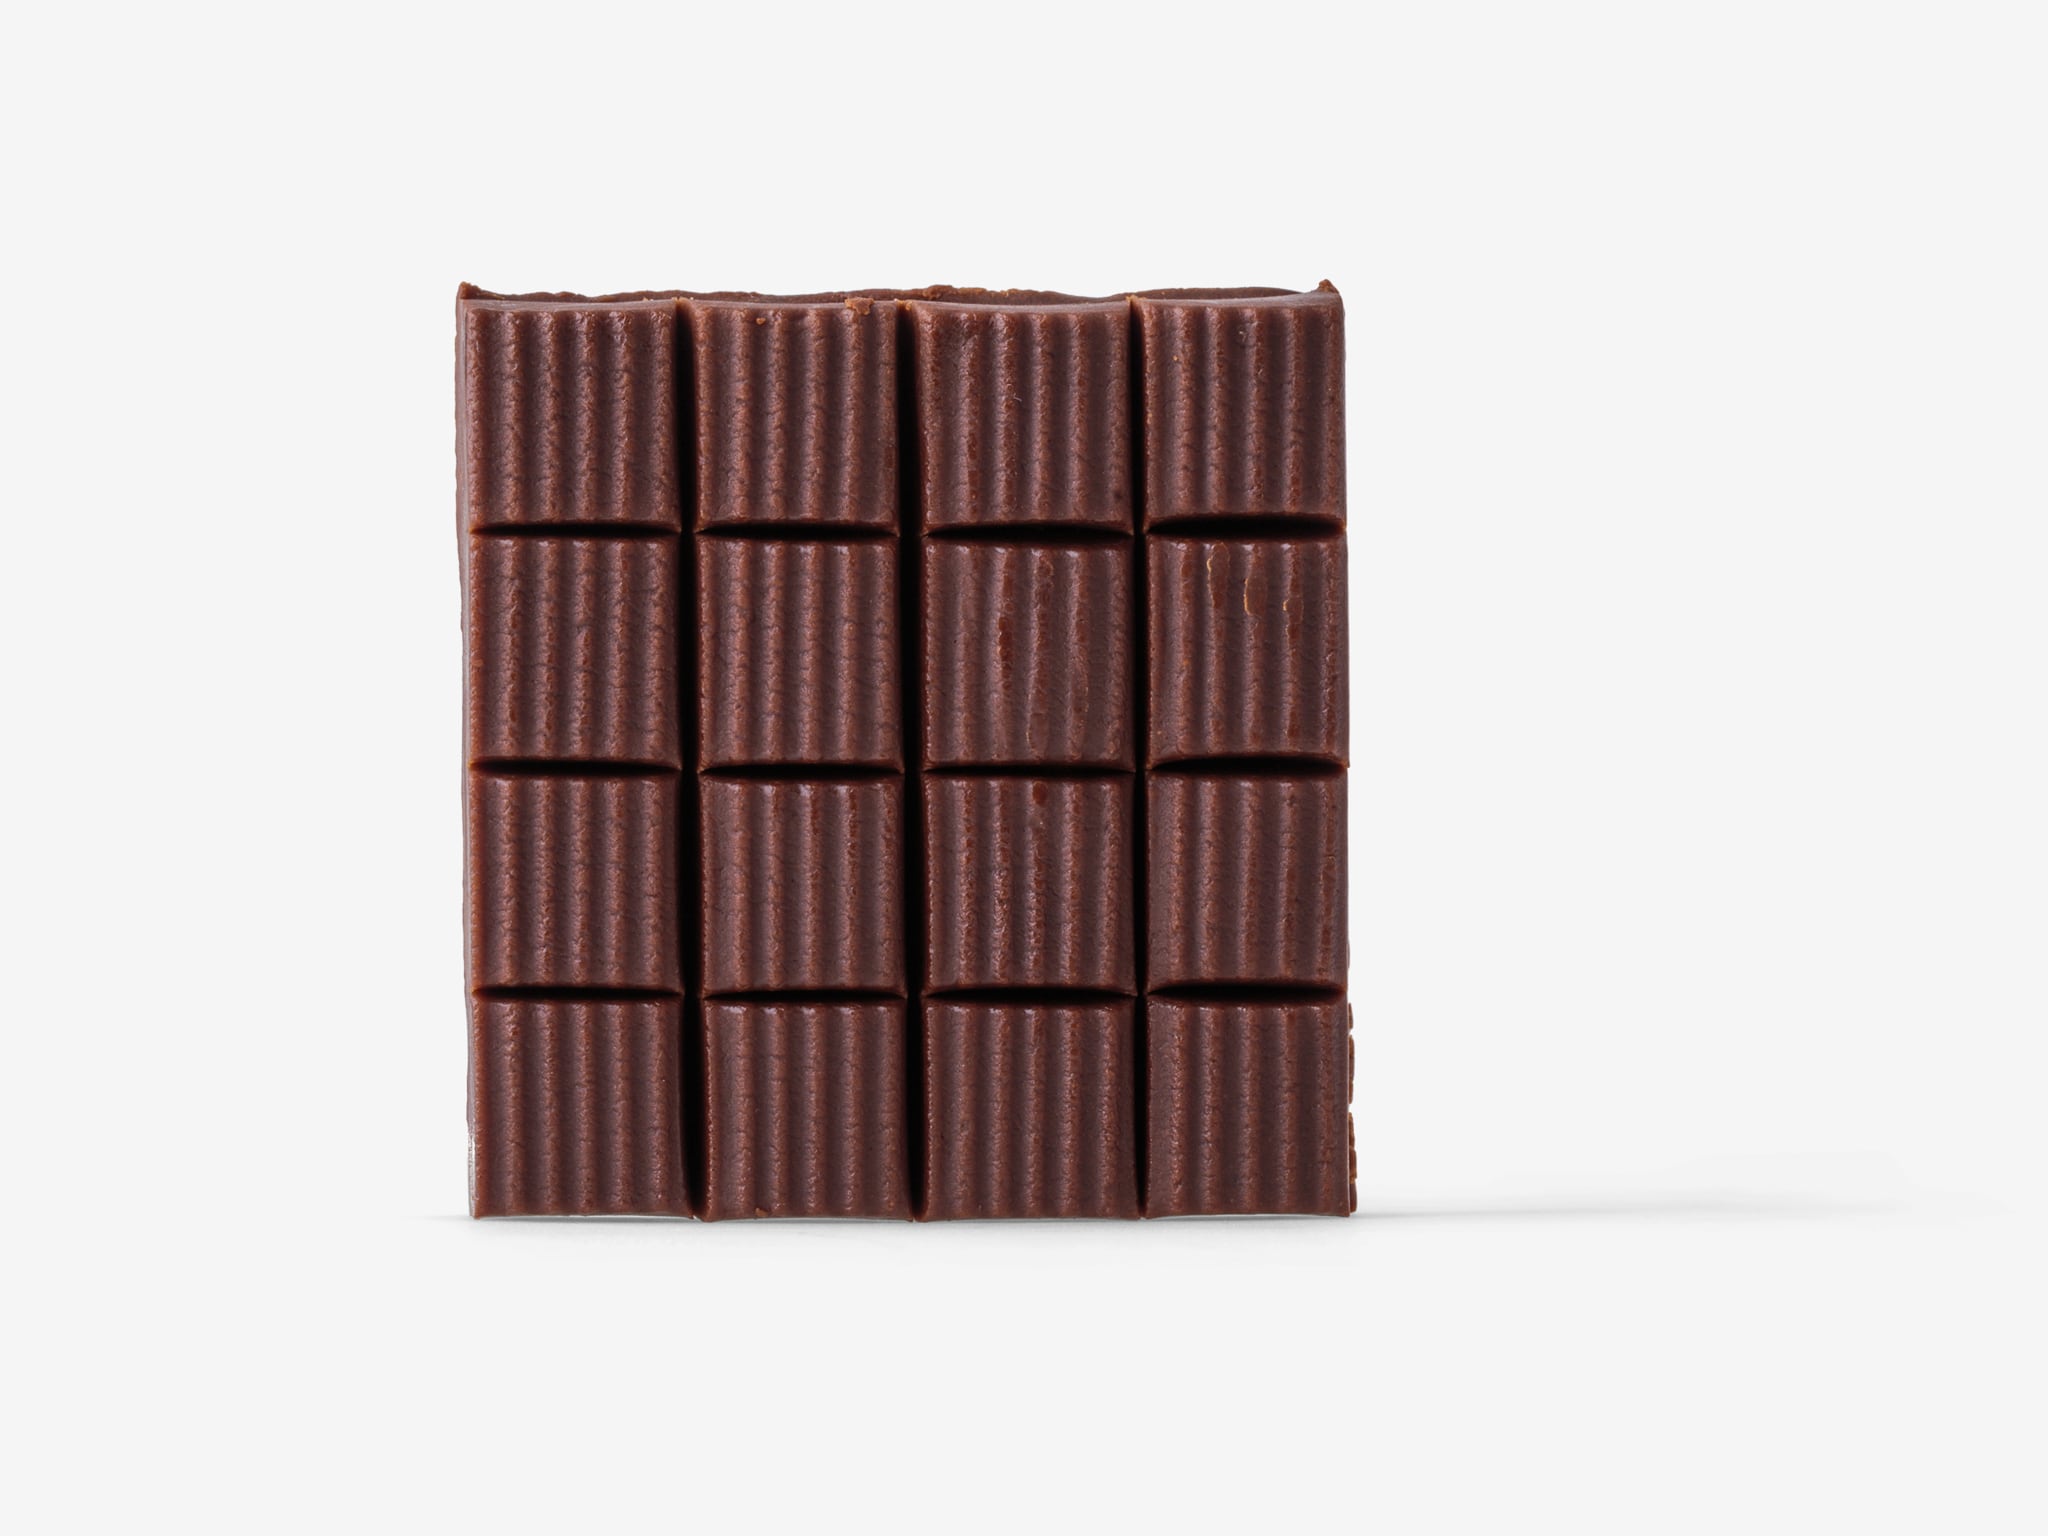 Chocolate PSD isolated image